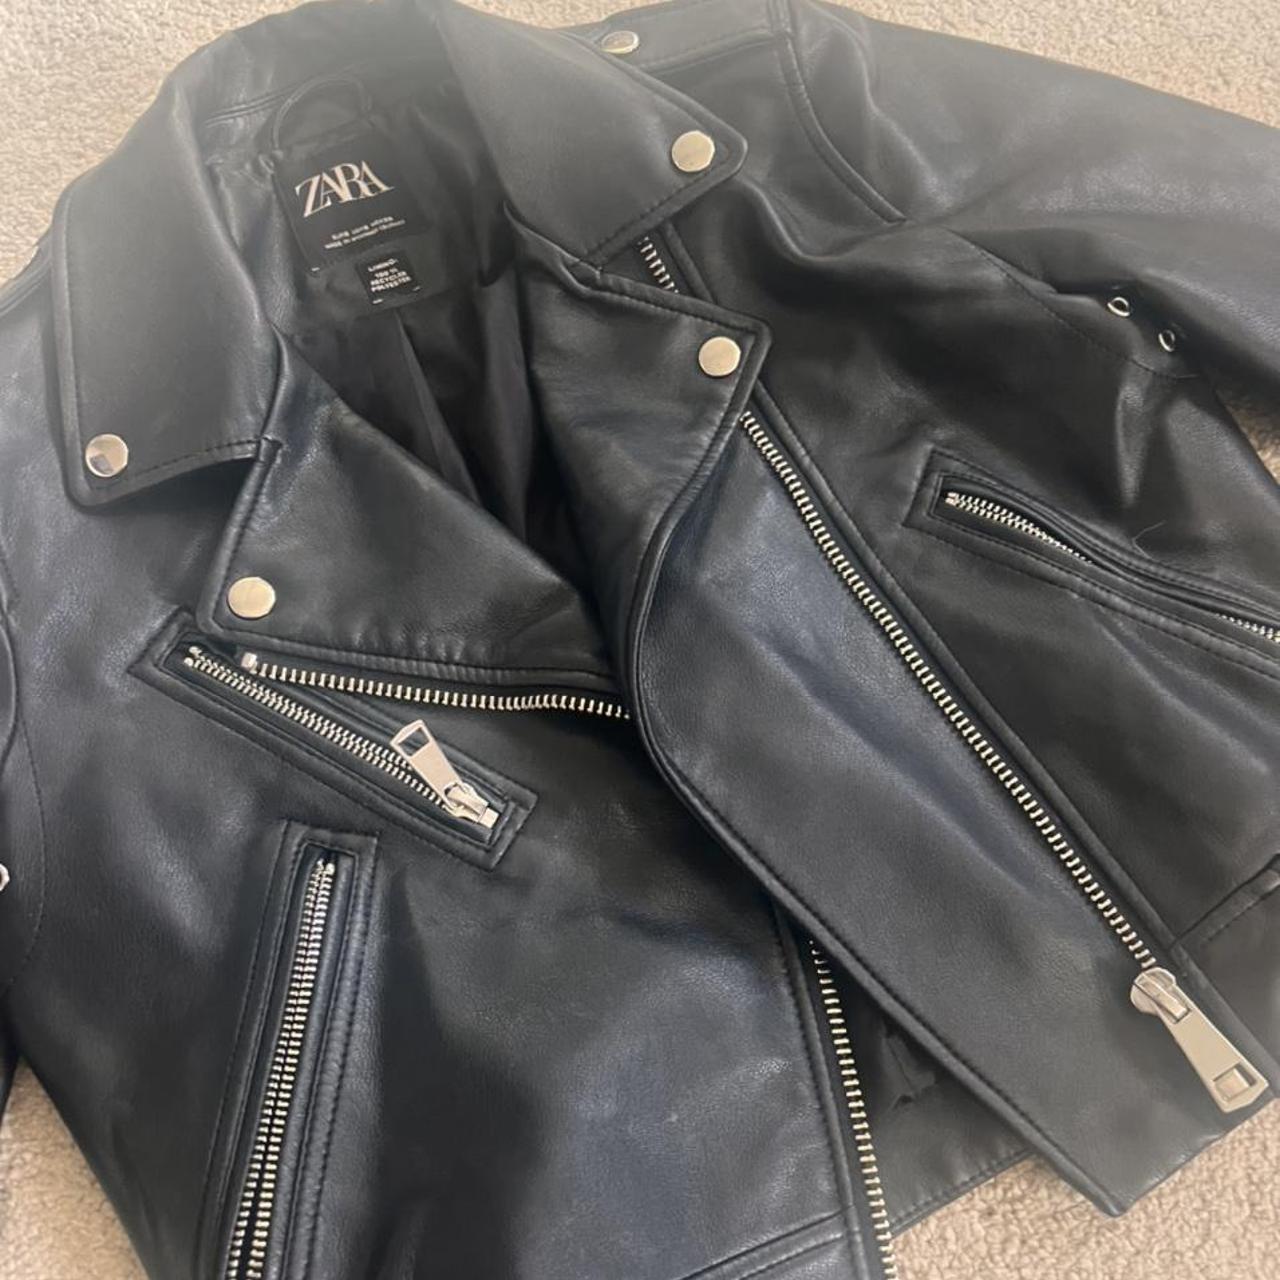 Zara leather jacket New condition Worn a handful... - Depop